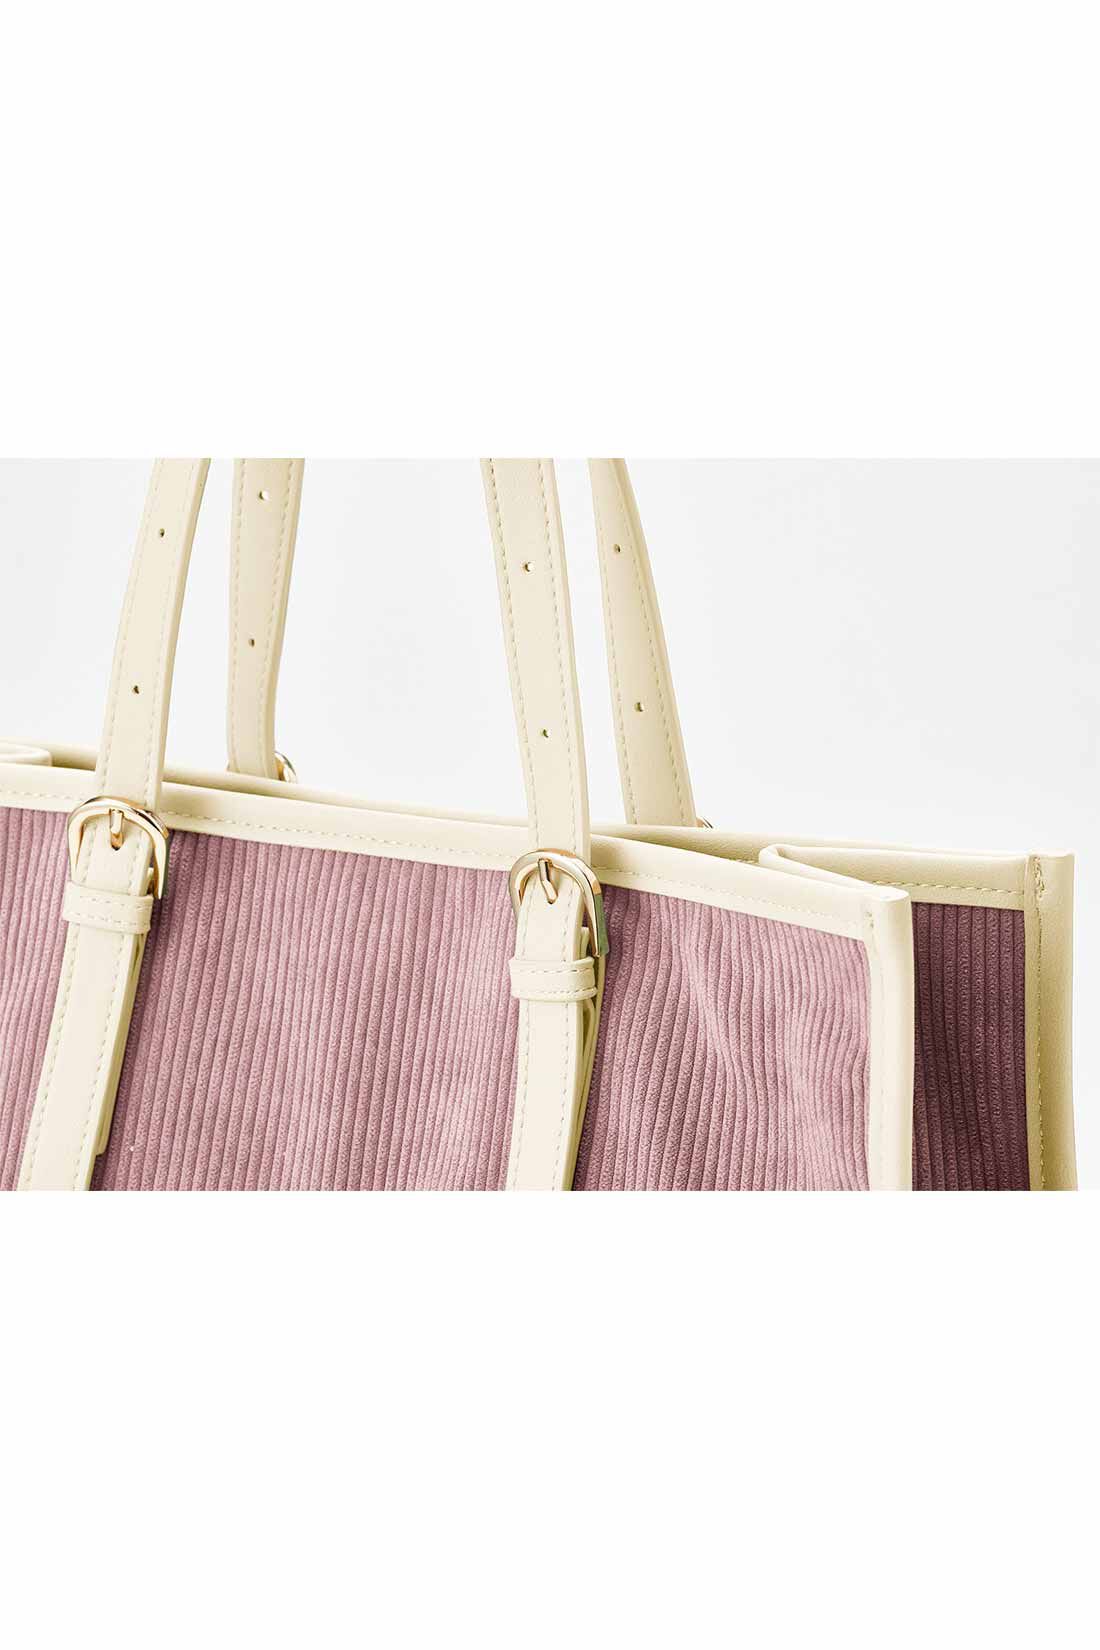 OSYAIRO|OSYAIRO　ジャンボうちわが入るコーデュロイトートバッグ〈ピンク〉|持ち手の長さはバックルで調節可能です。